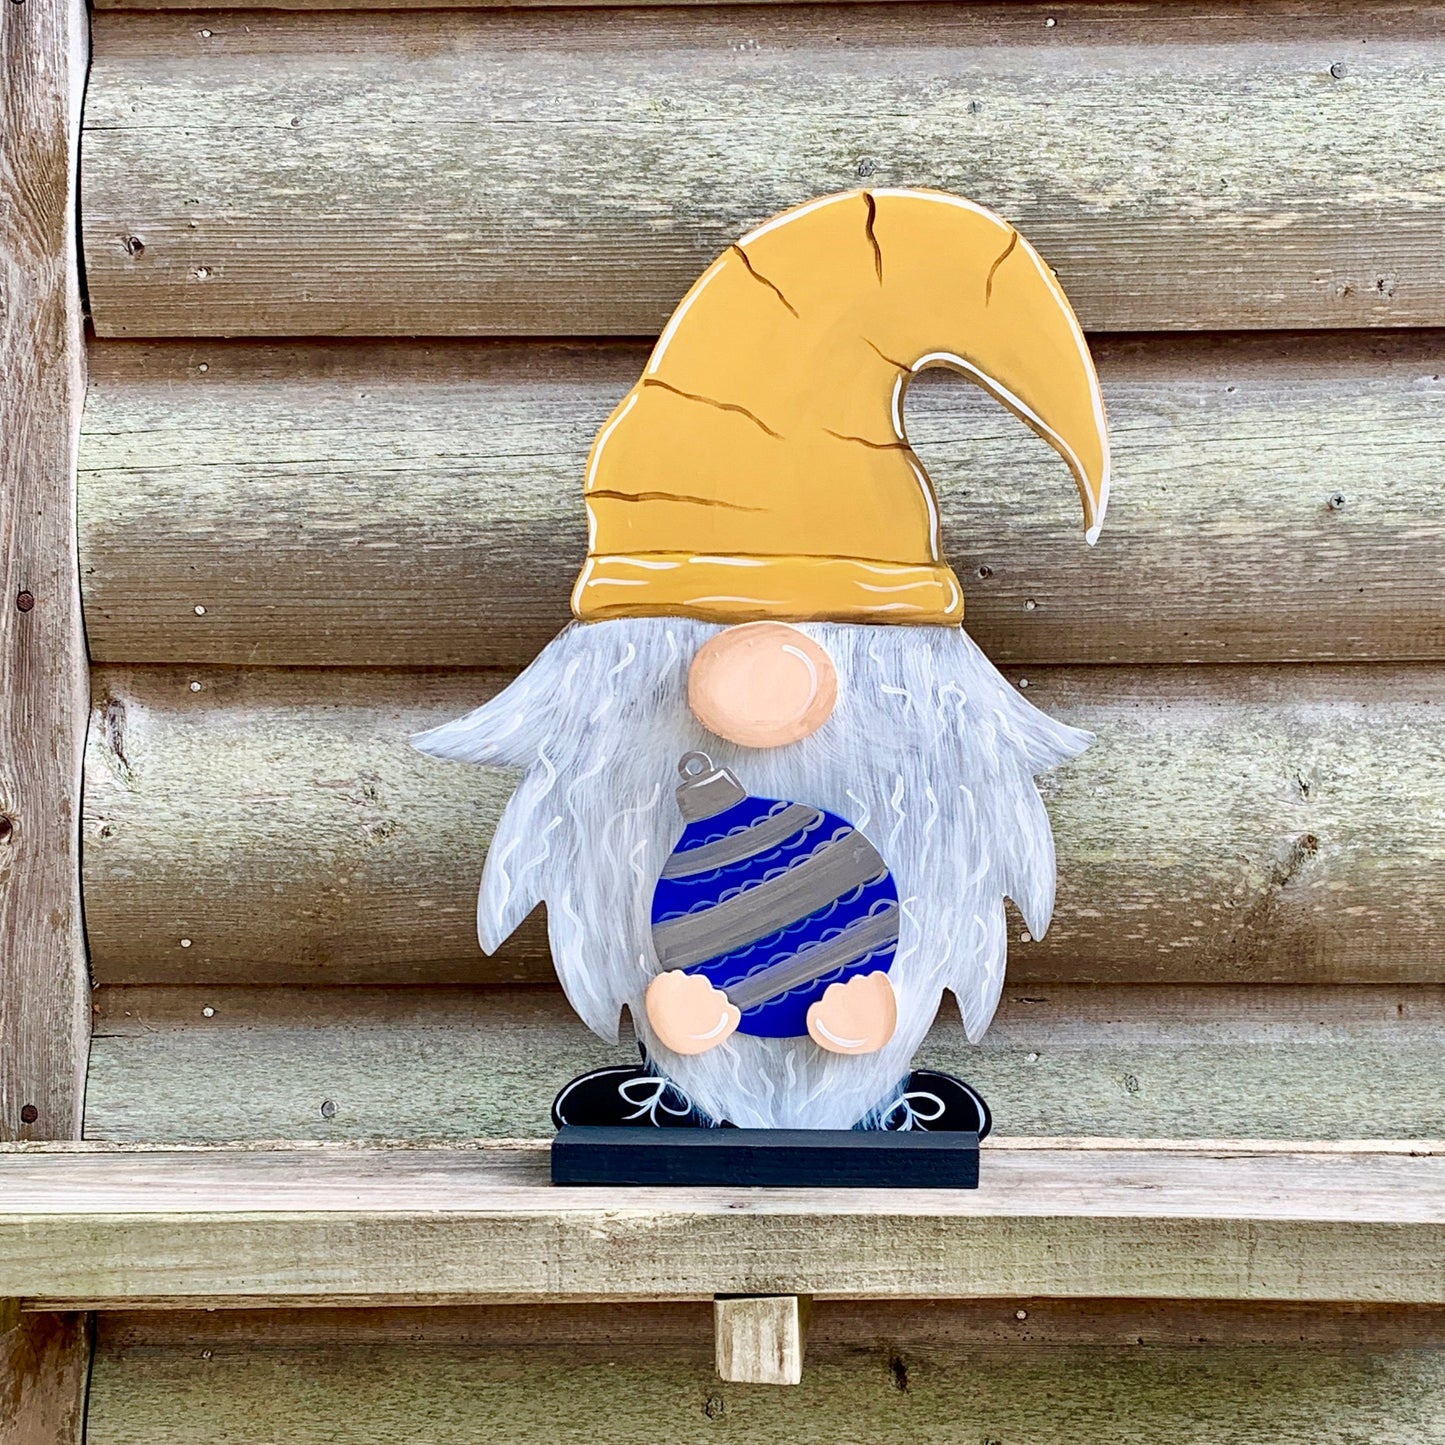 gnome with interchangeable seasonal cutouts